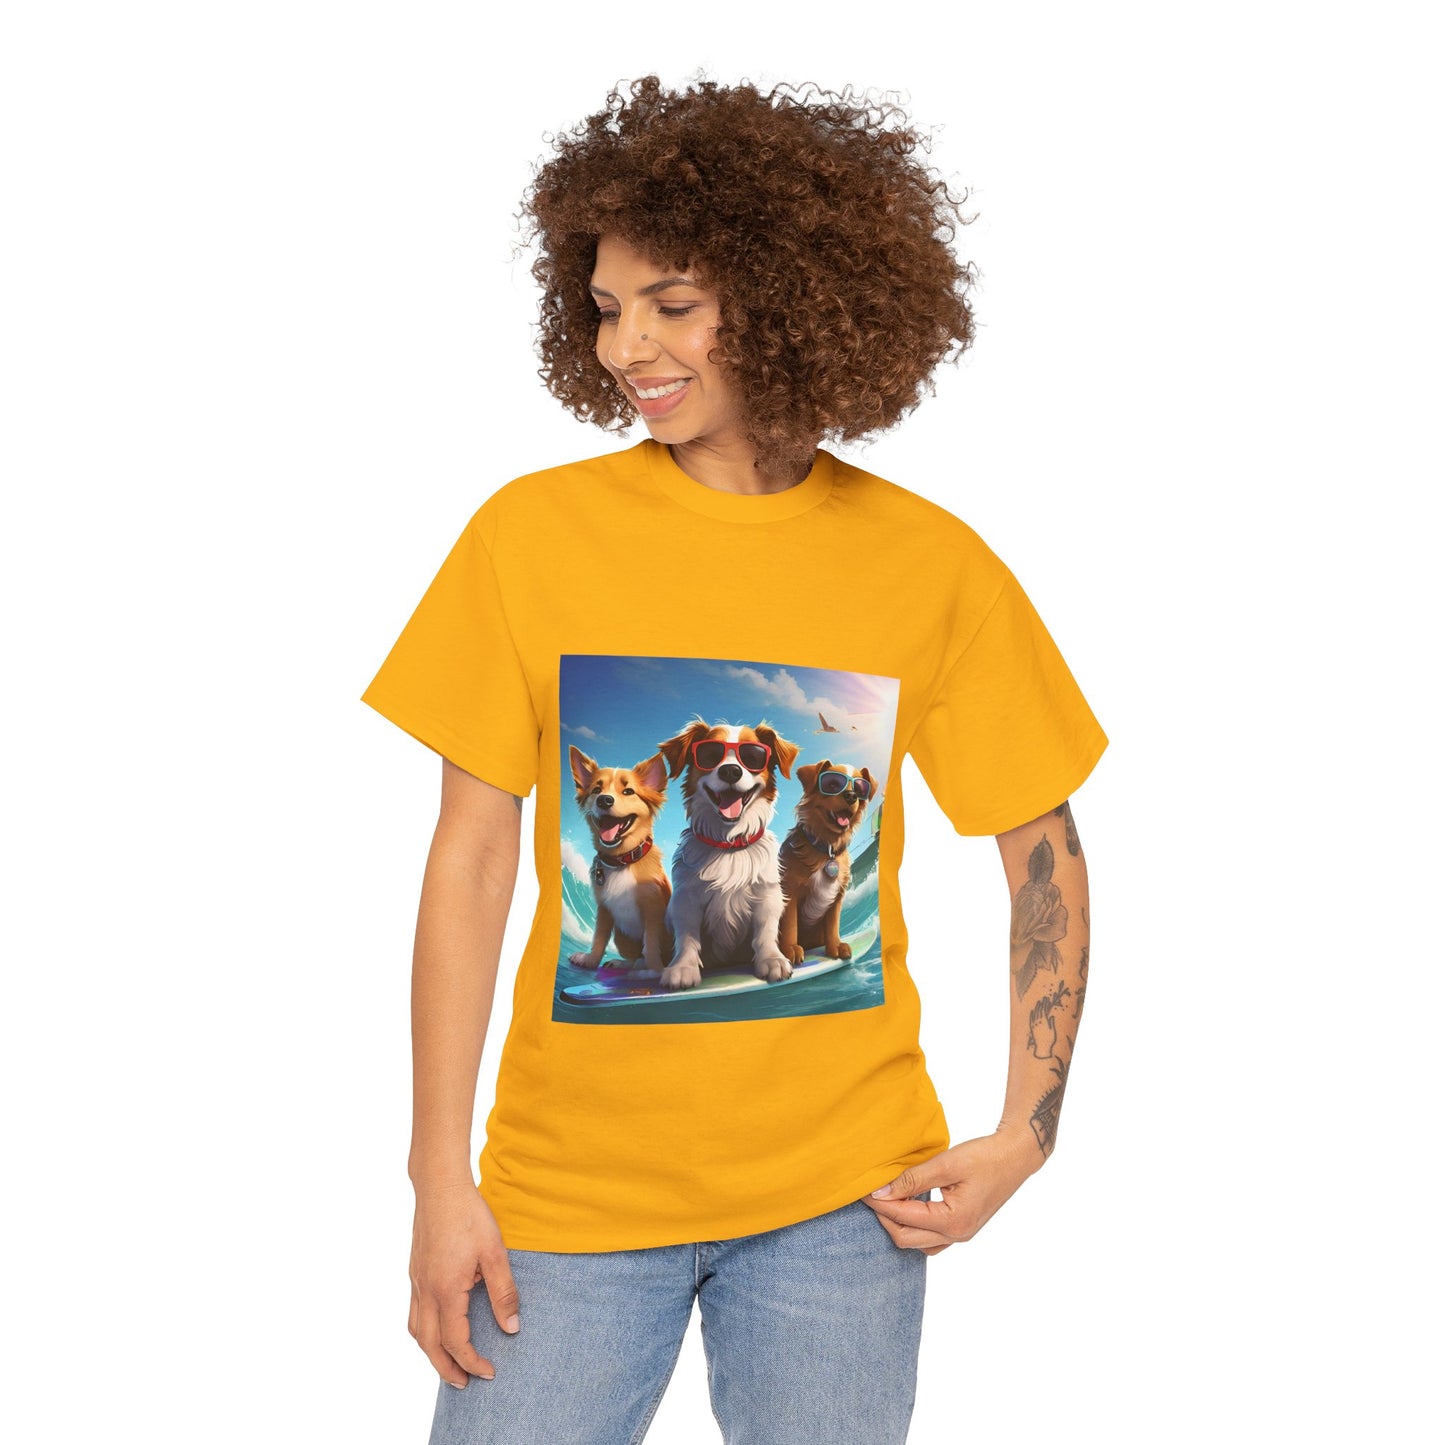 T-shirt - Hunde surfing